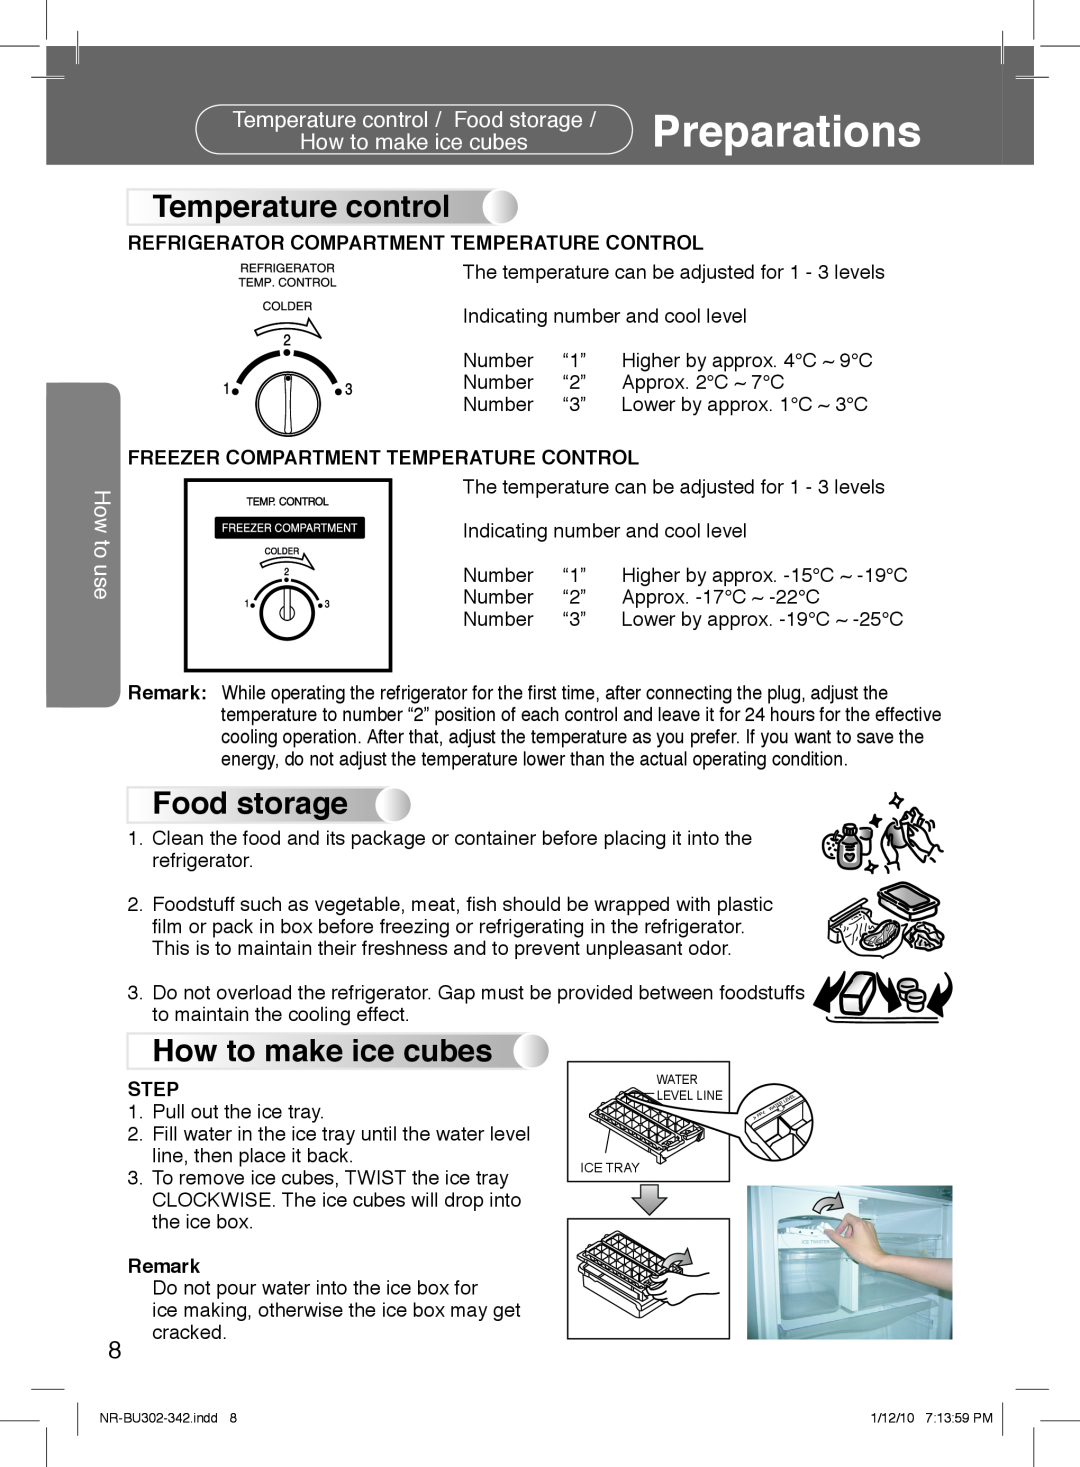 Panasonic NR-BU302, NR-BU342 manual Preparations, Temperature control, Food storage, How to make ice cubes, How to use 